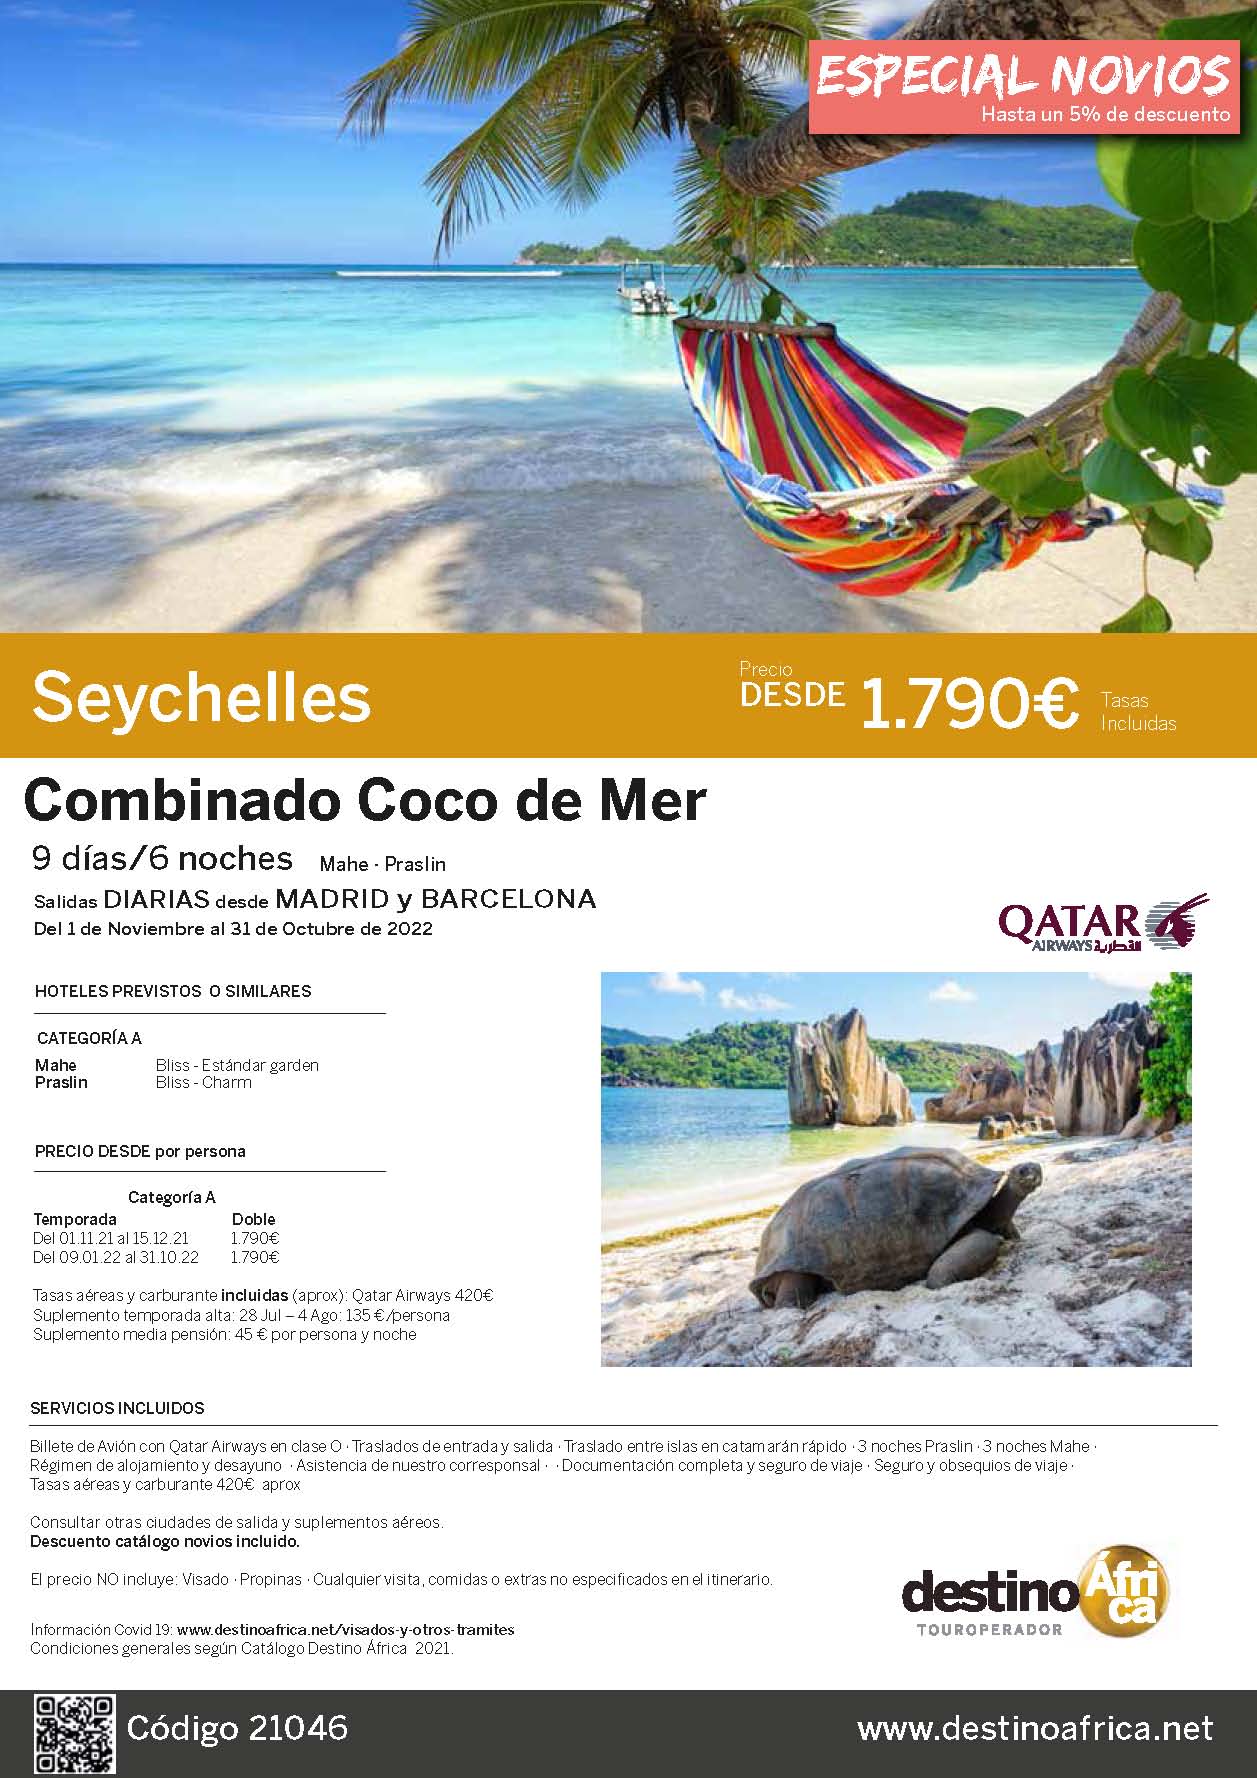 Ofertas Destino Asia Seychelles 2022 Sun vuelos Qatar Airways salidas desde Madrid y Barcelona